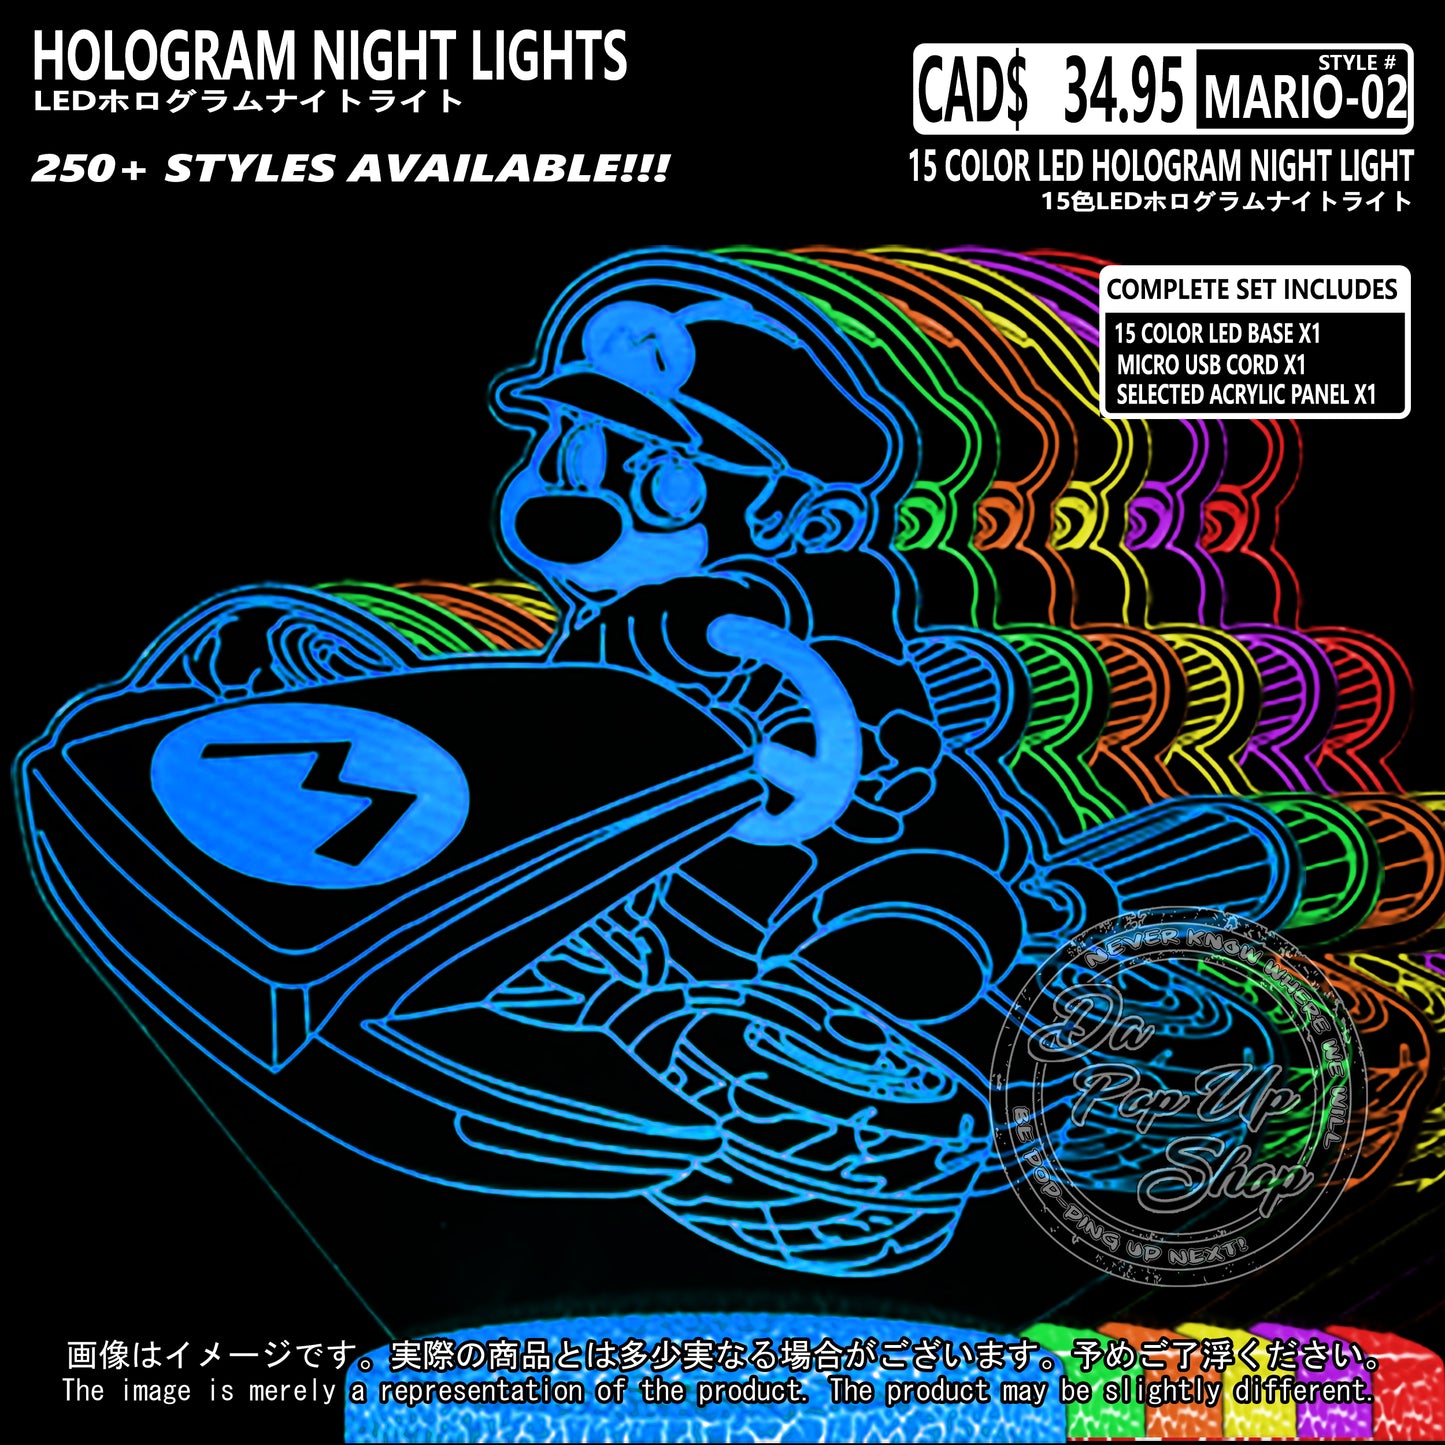 (MARIO-02) Super Mario Bros. Hologram LED Night Light